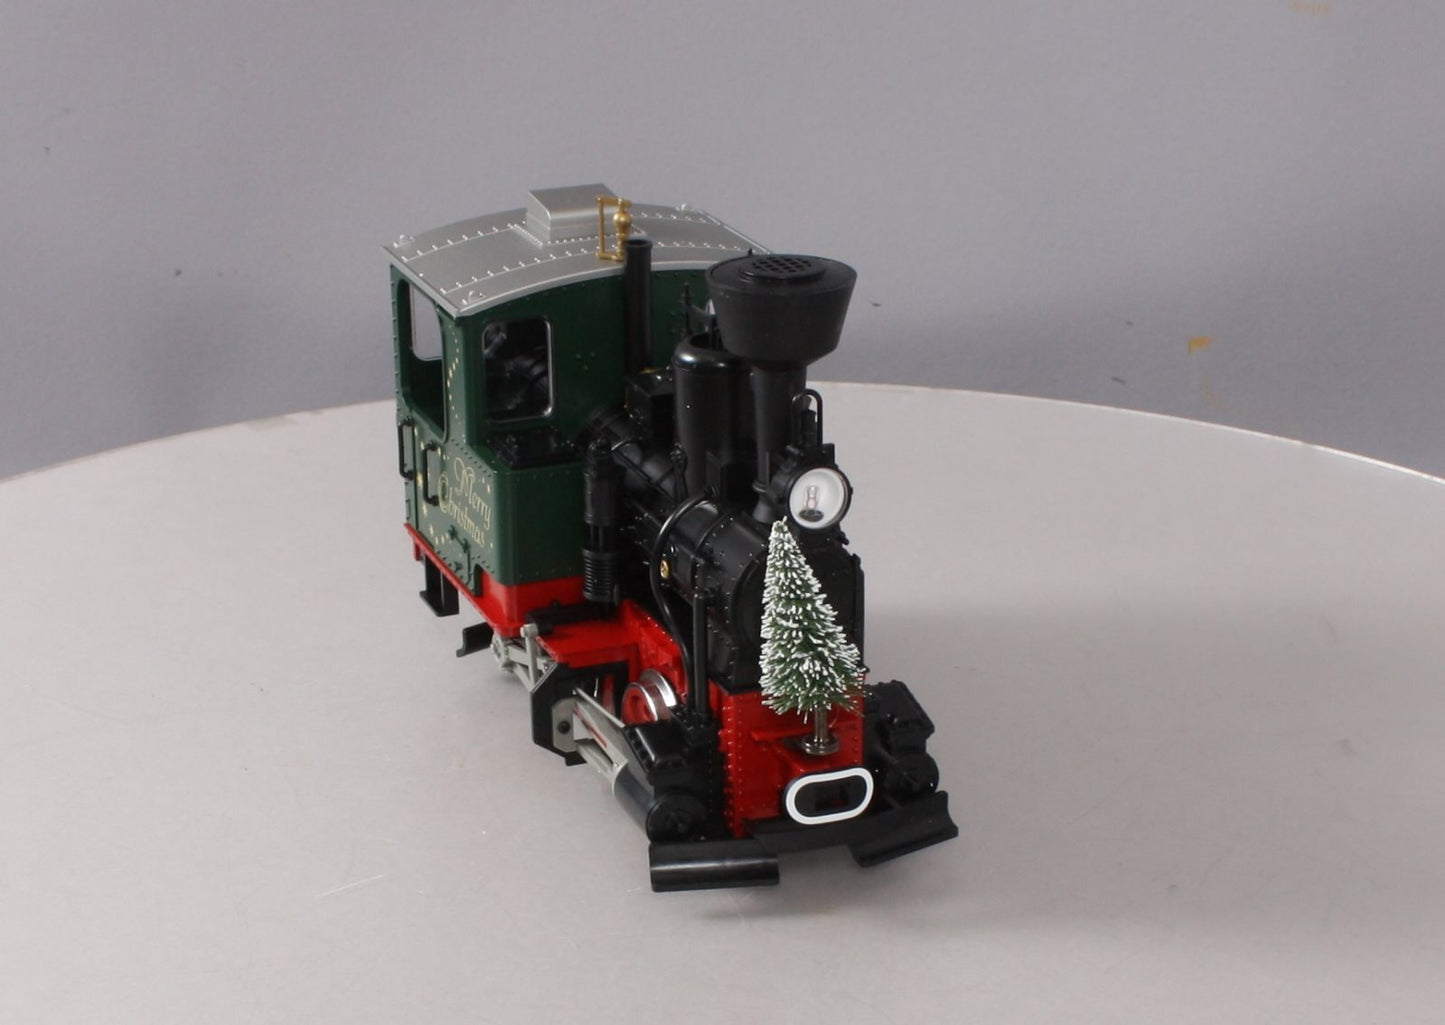 LGB 20215 G "Stainz" Christmas Locomotive